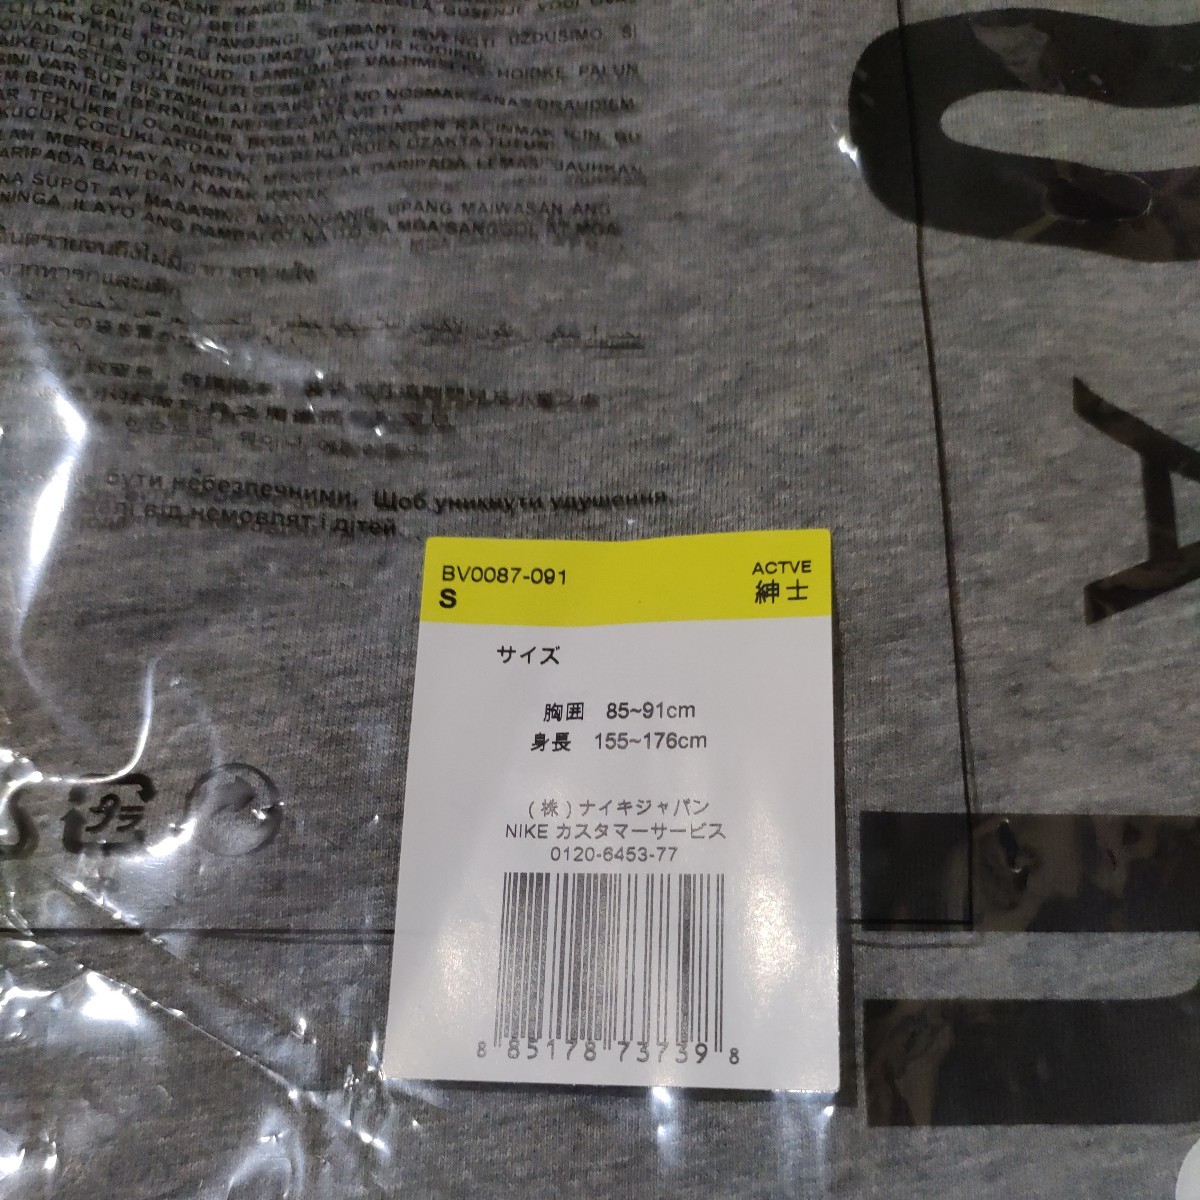 NIKE ナイキ Tシャツ jodan ジョーダン グレー 新品未使用 送料込み Sサイズ